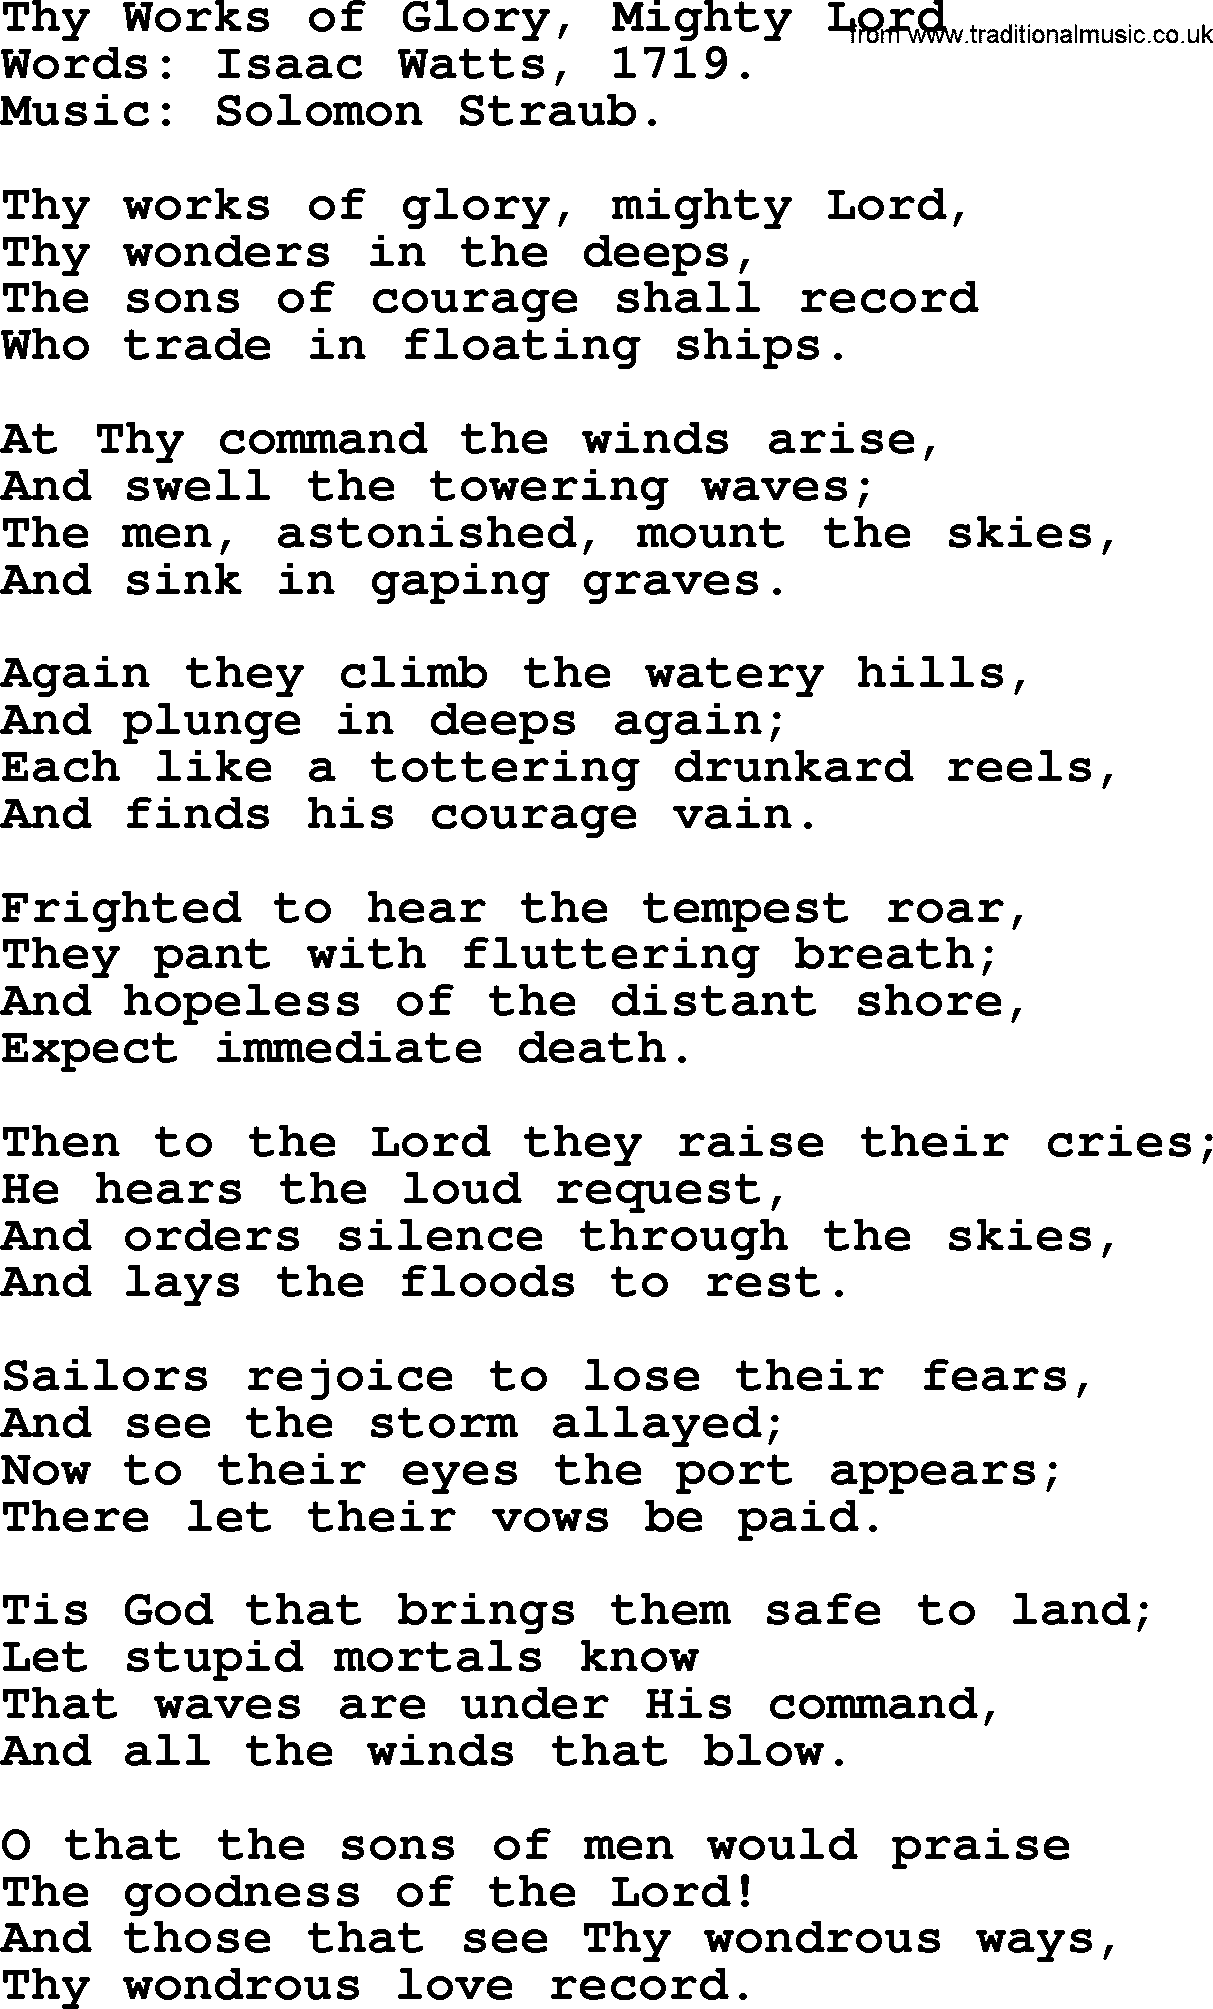 Isaac Watts Christian hymn: Thy Works of Glory, Mighty Lord- lyricss